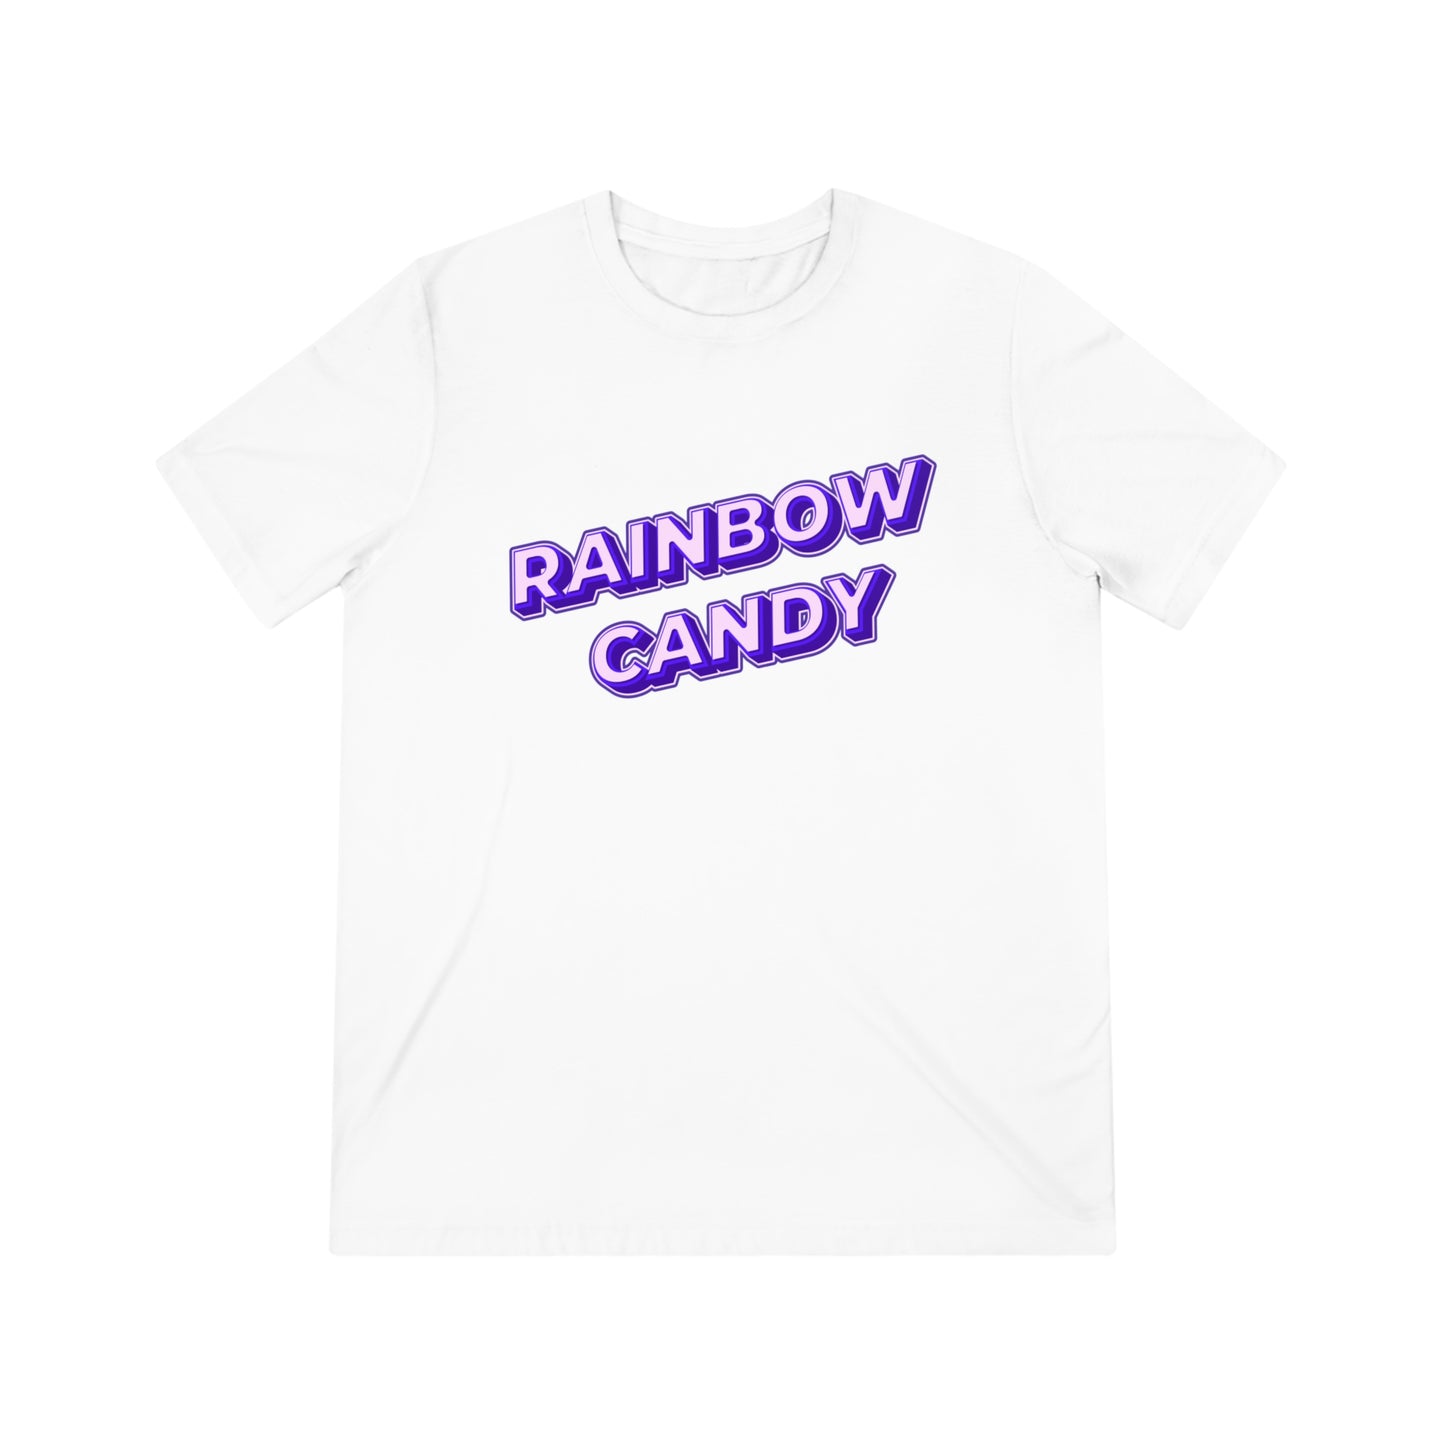 Rainbow Candy - T-Shirt